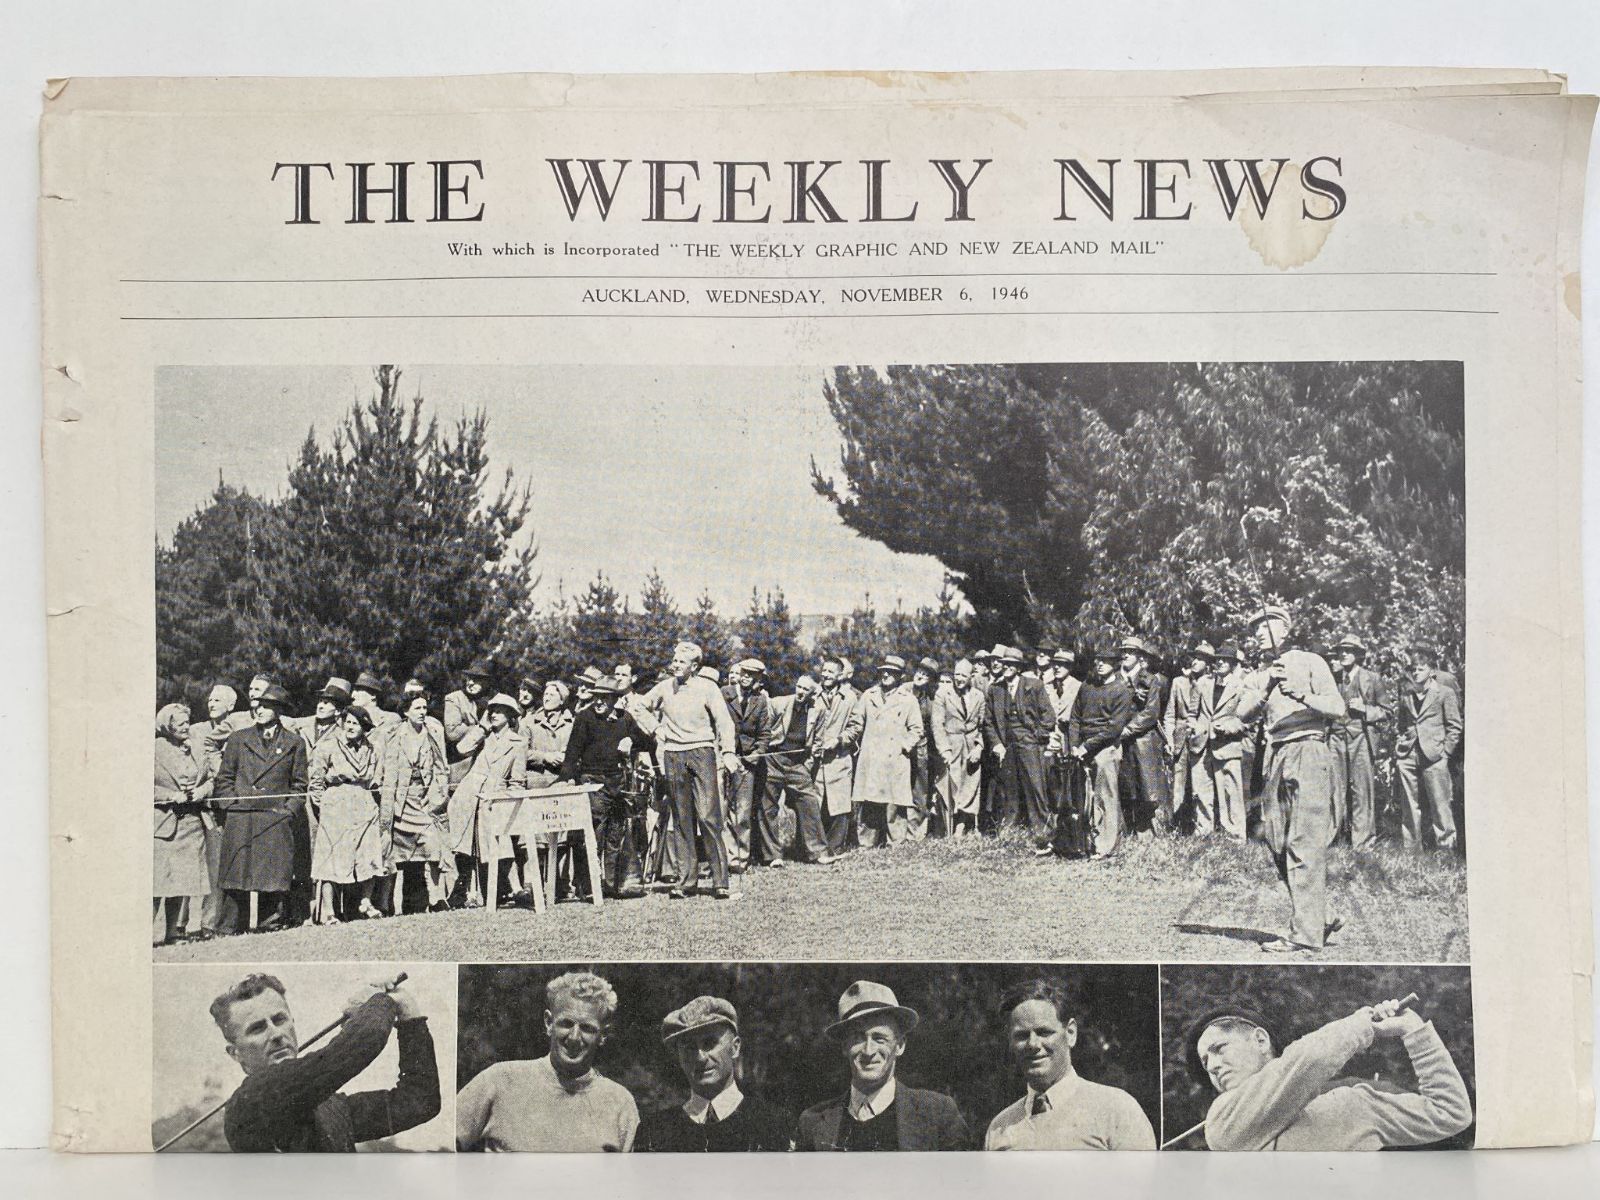 OLD NEWSPAPER: The Weekly News, 6 November 1946